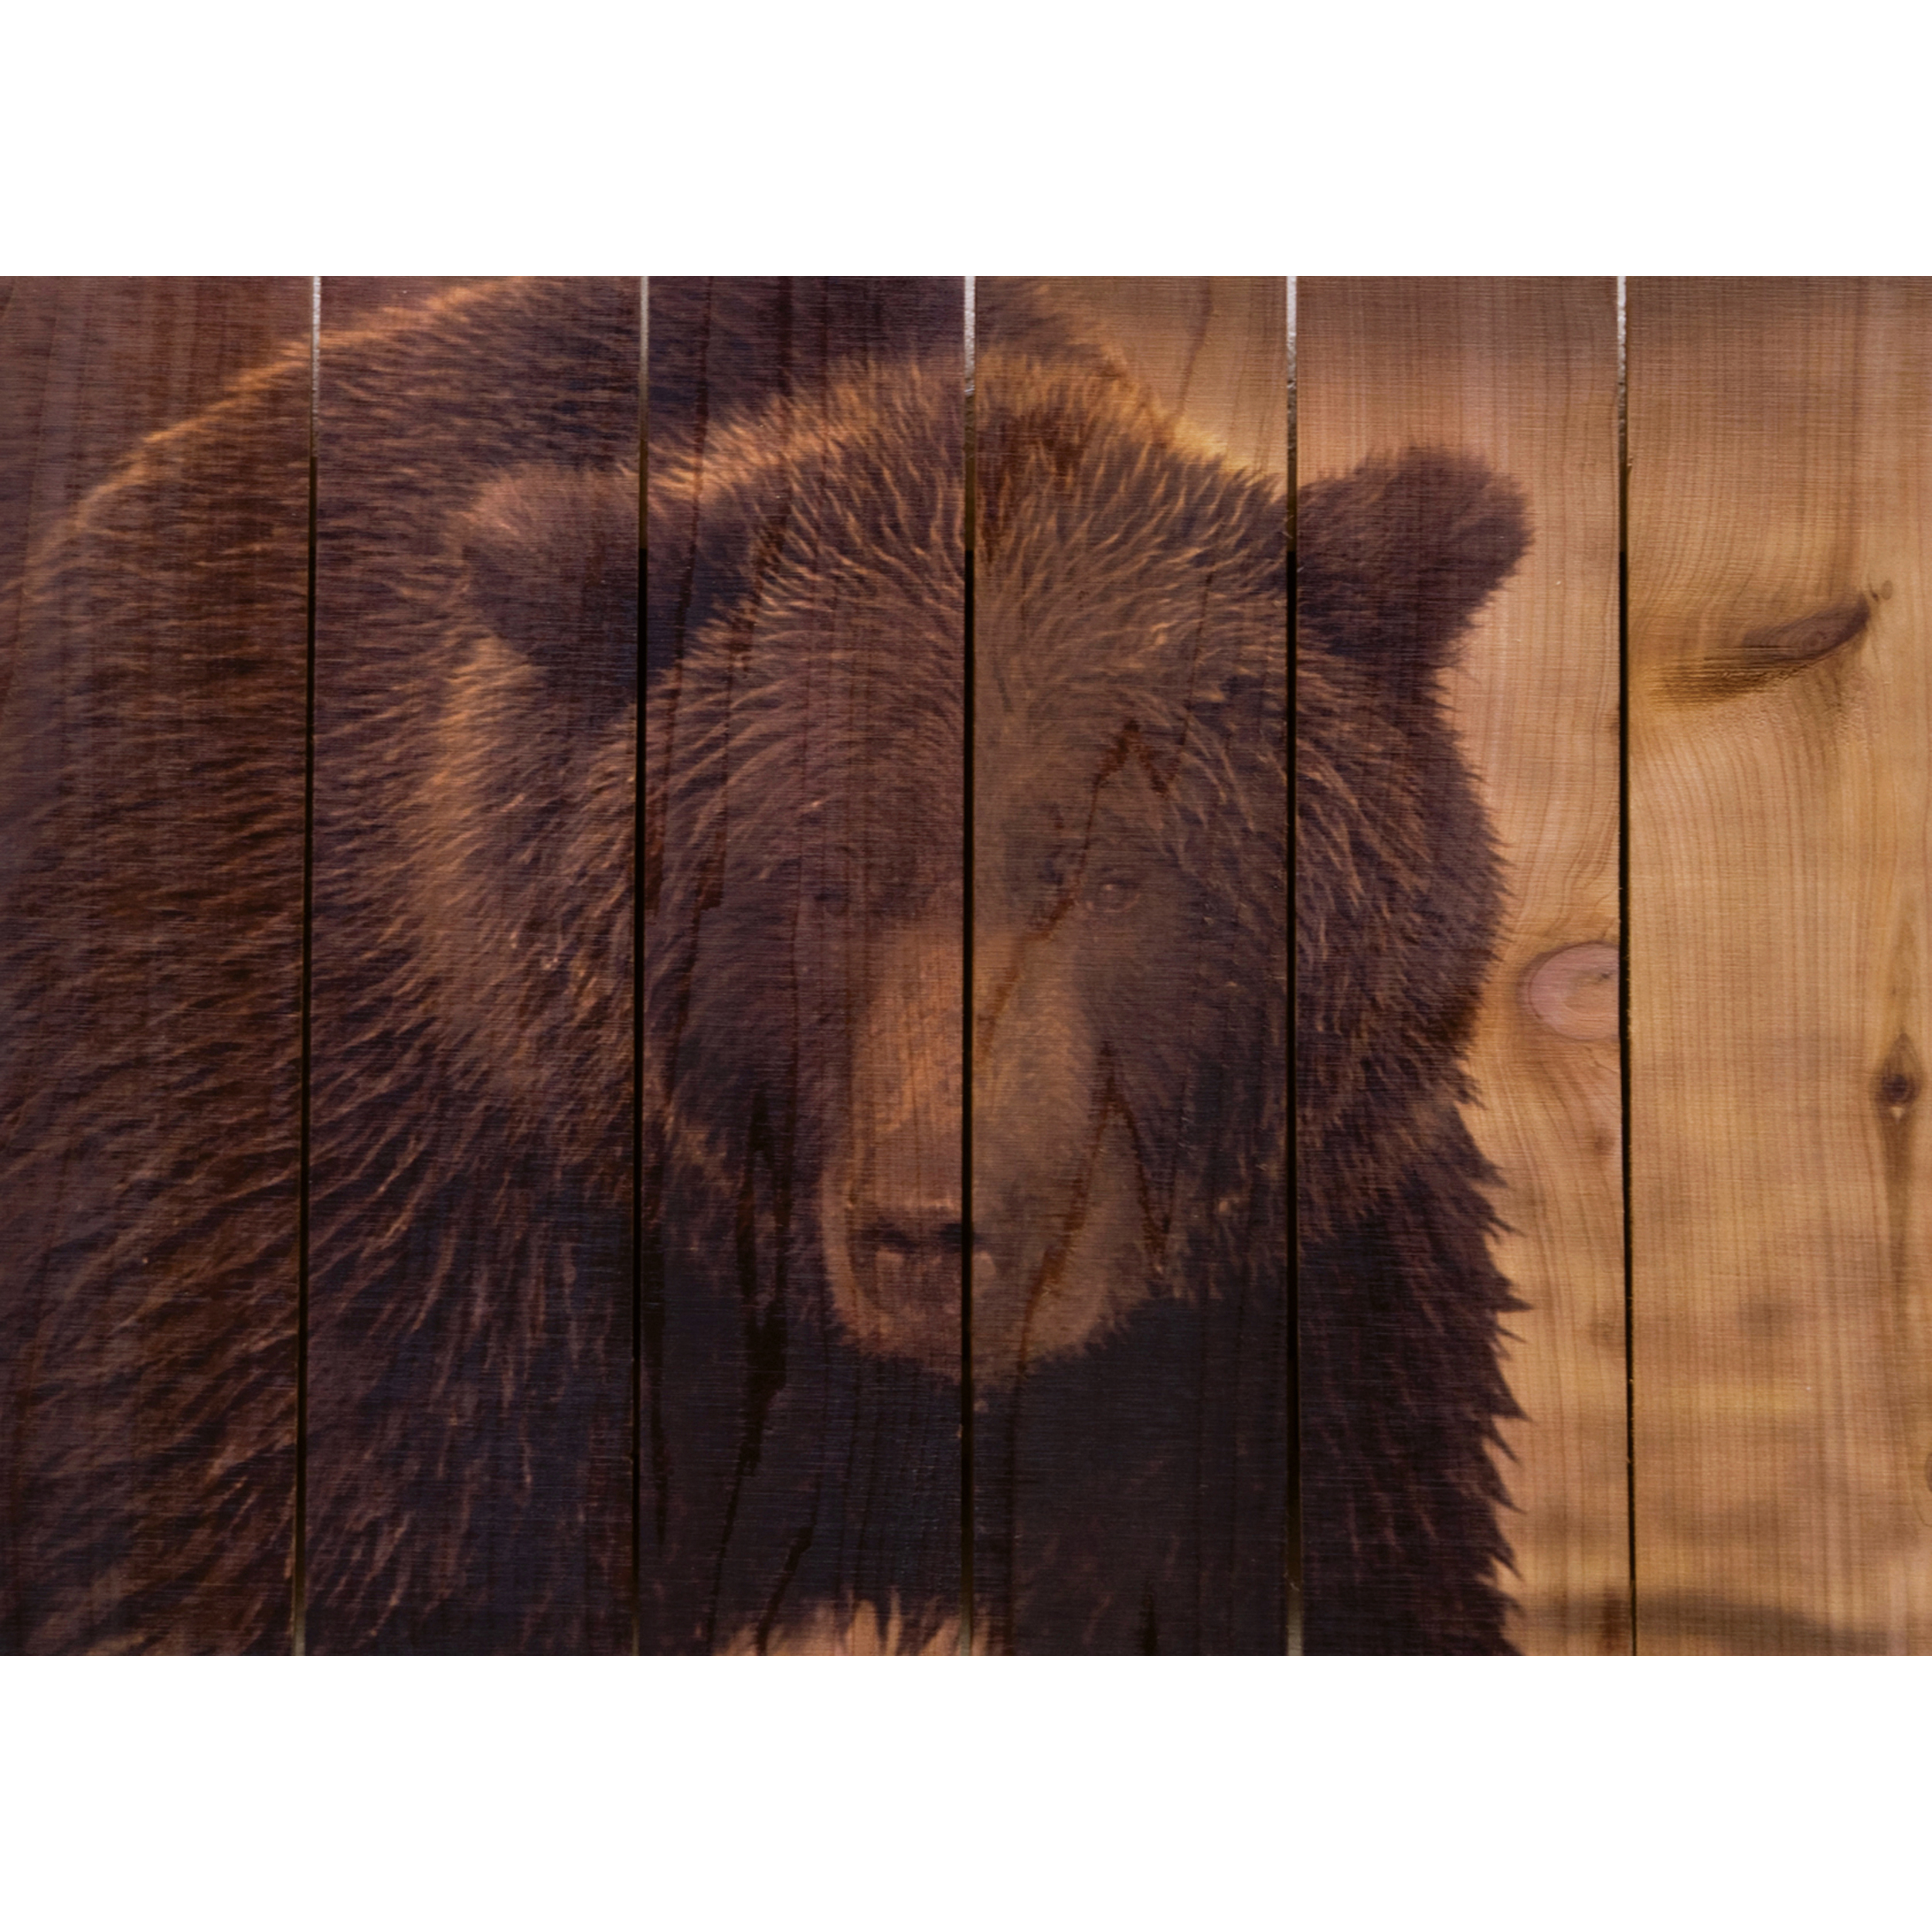 Daydream Gizaun Cedar Wall Art, Big Bear, 33" X 24"